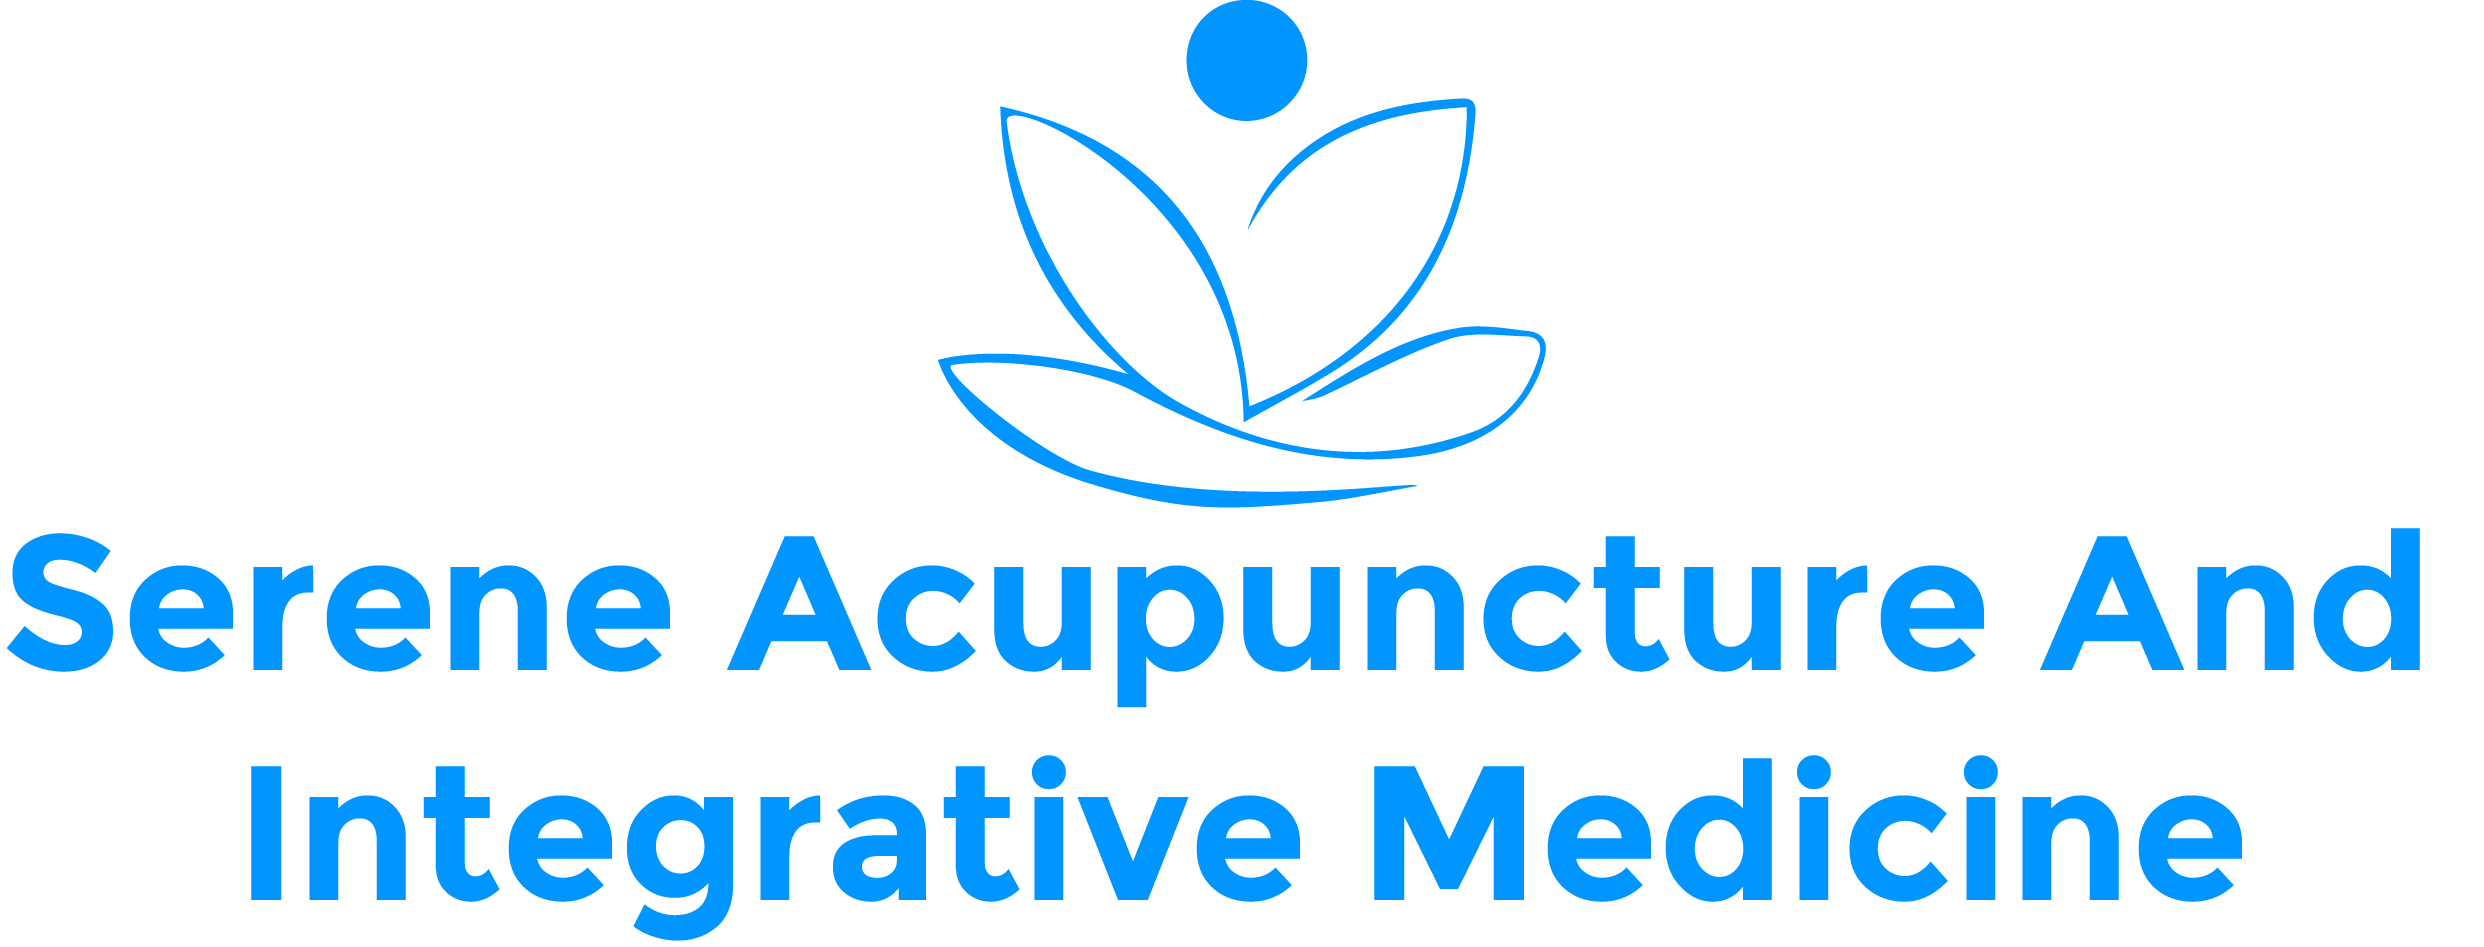 Serene Acupuncture and Integrative Medicine